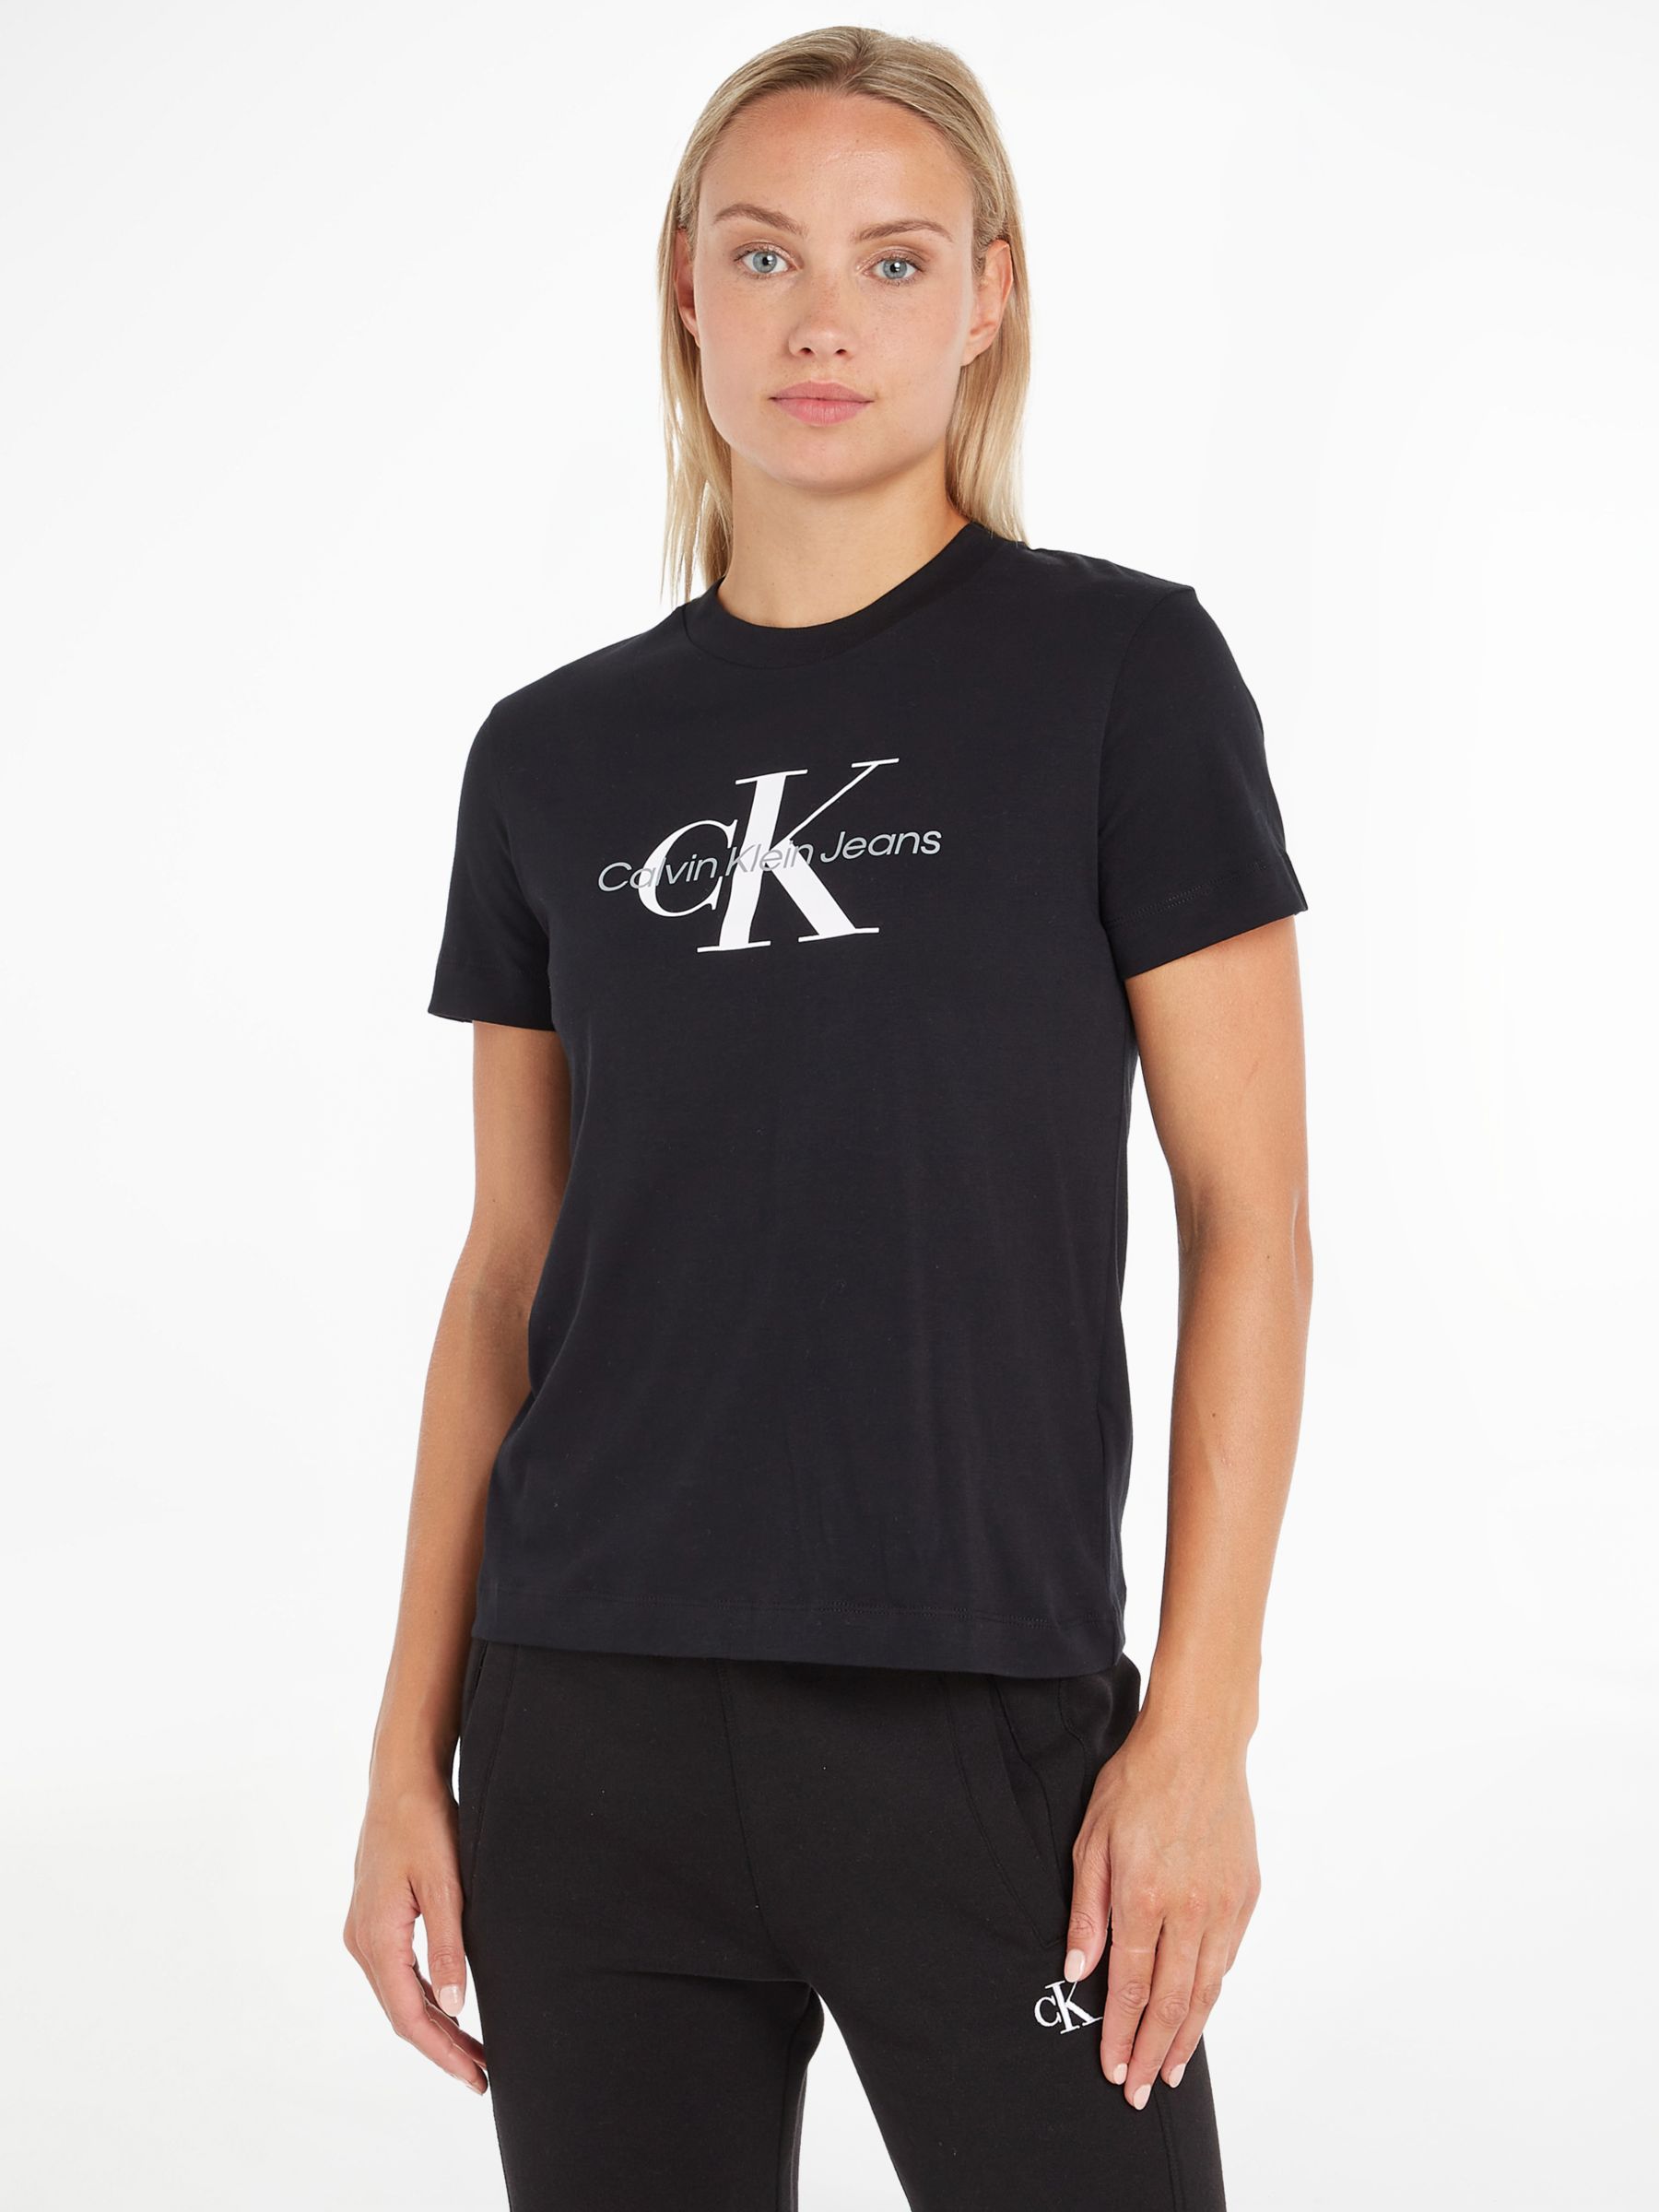 Women's Calvin Klein Shirts & Tops | John Lewis & Partners